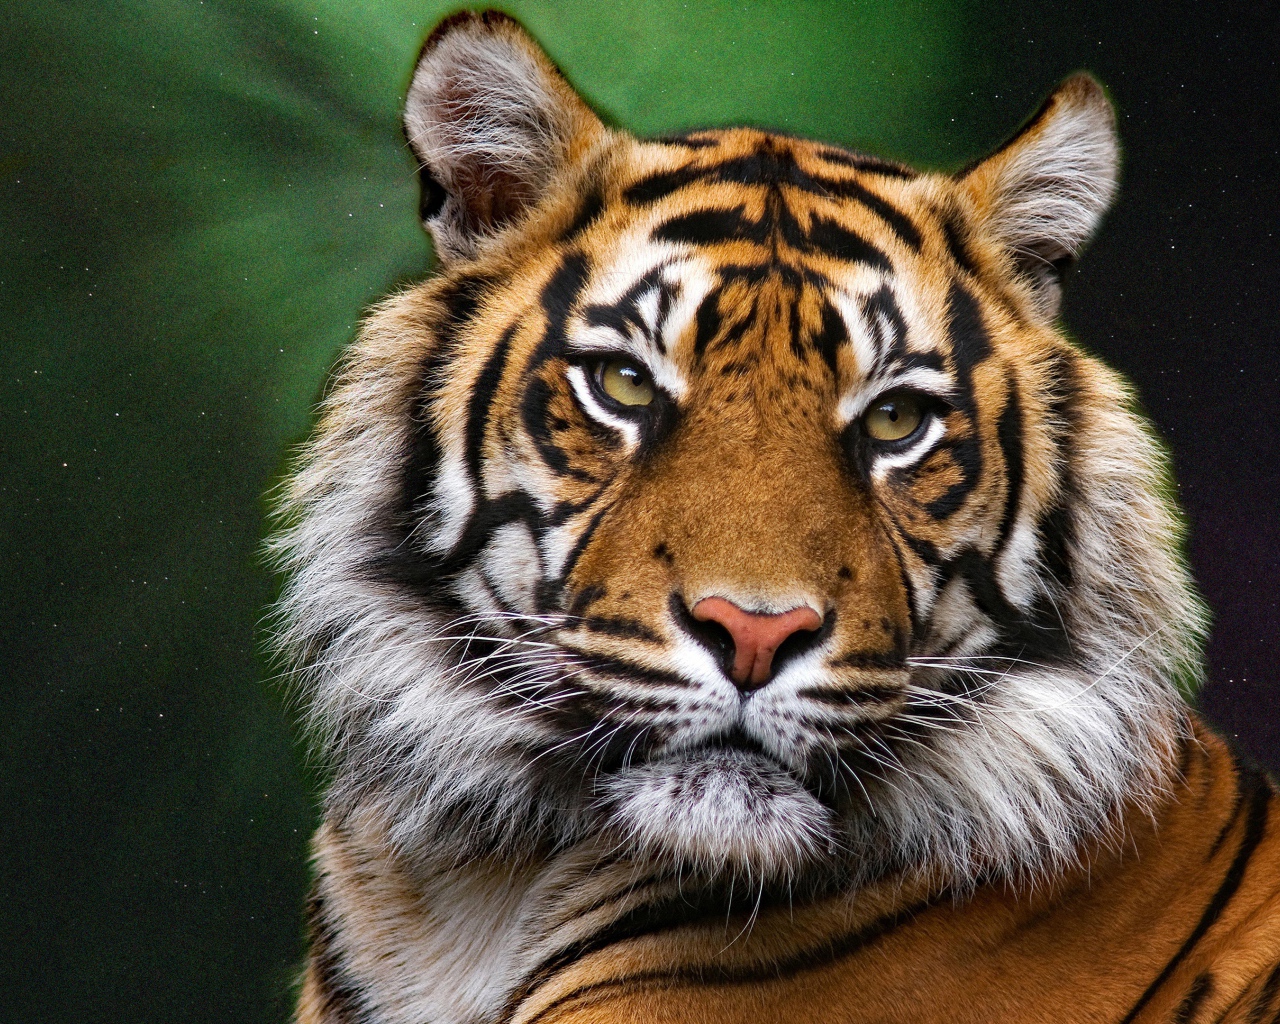 Морда большого полосатого тигра на зеленом фоне